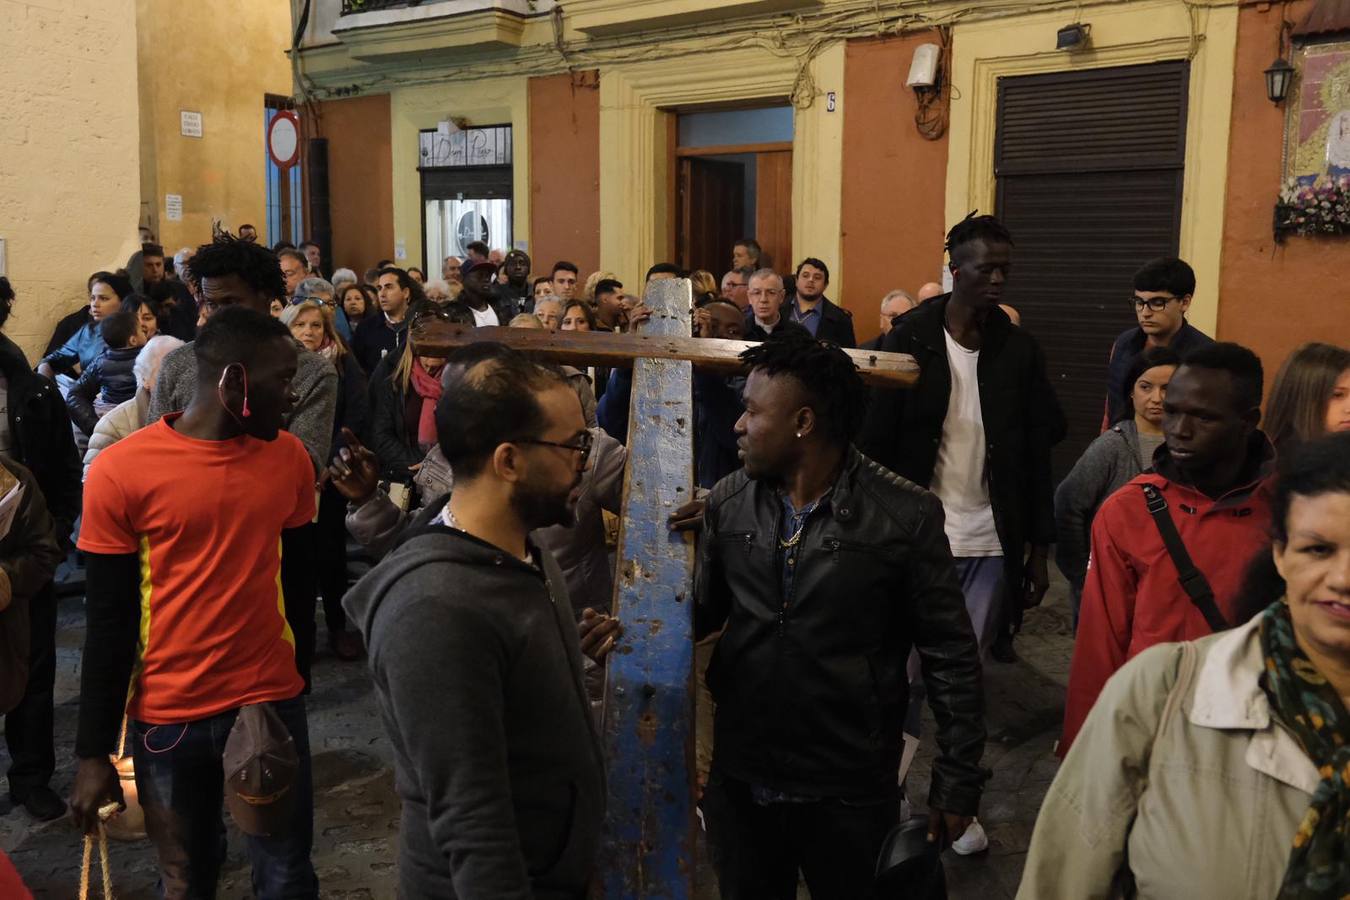 La Cruz de Lampedusa recorre las calles de Cádiz